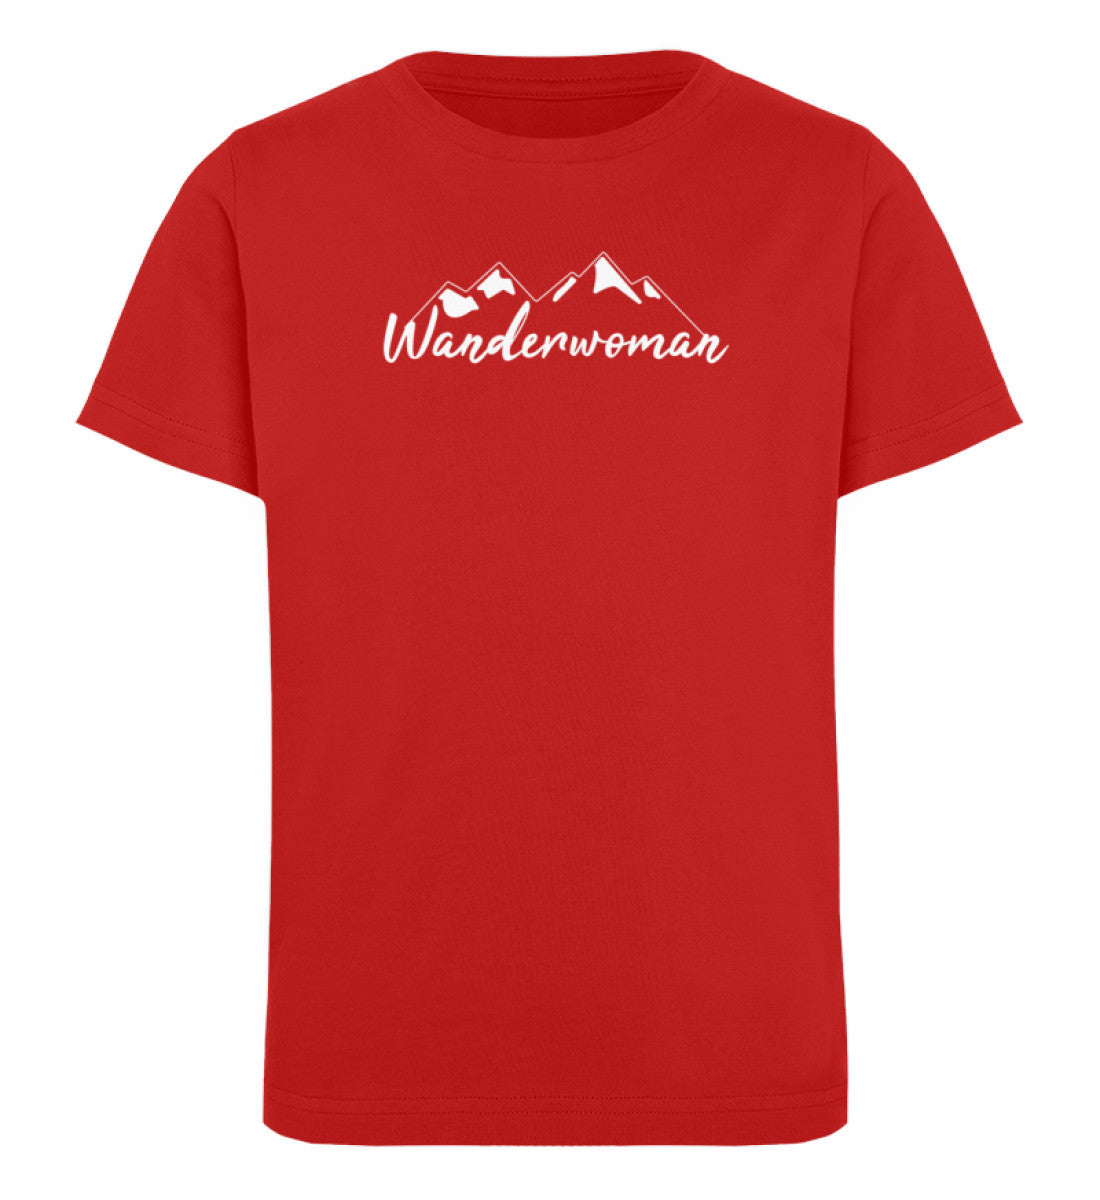 Wanderwoman. - Kinder Premium Organic T-Shirt Rot